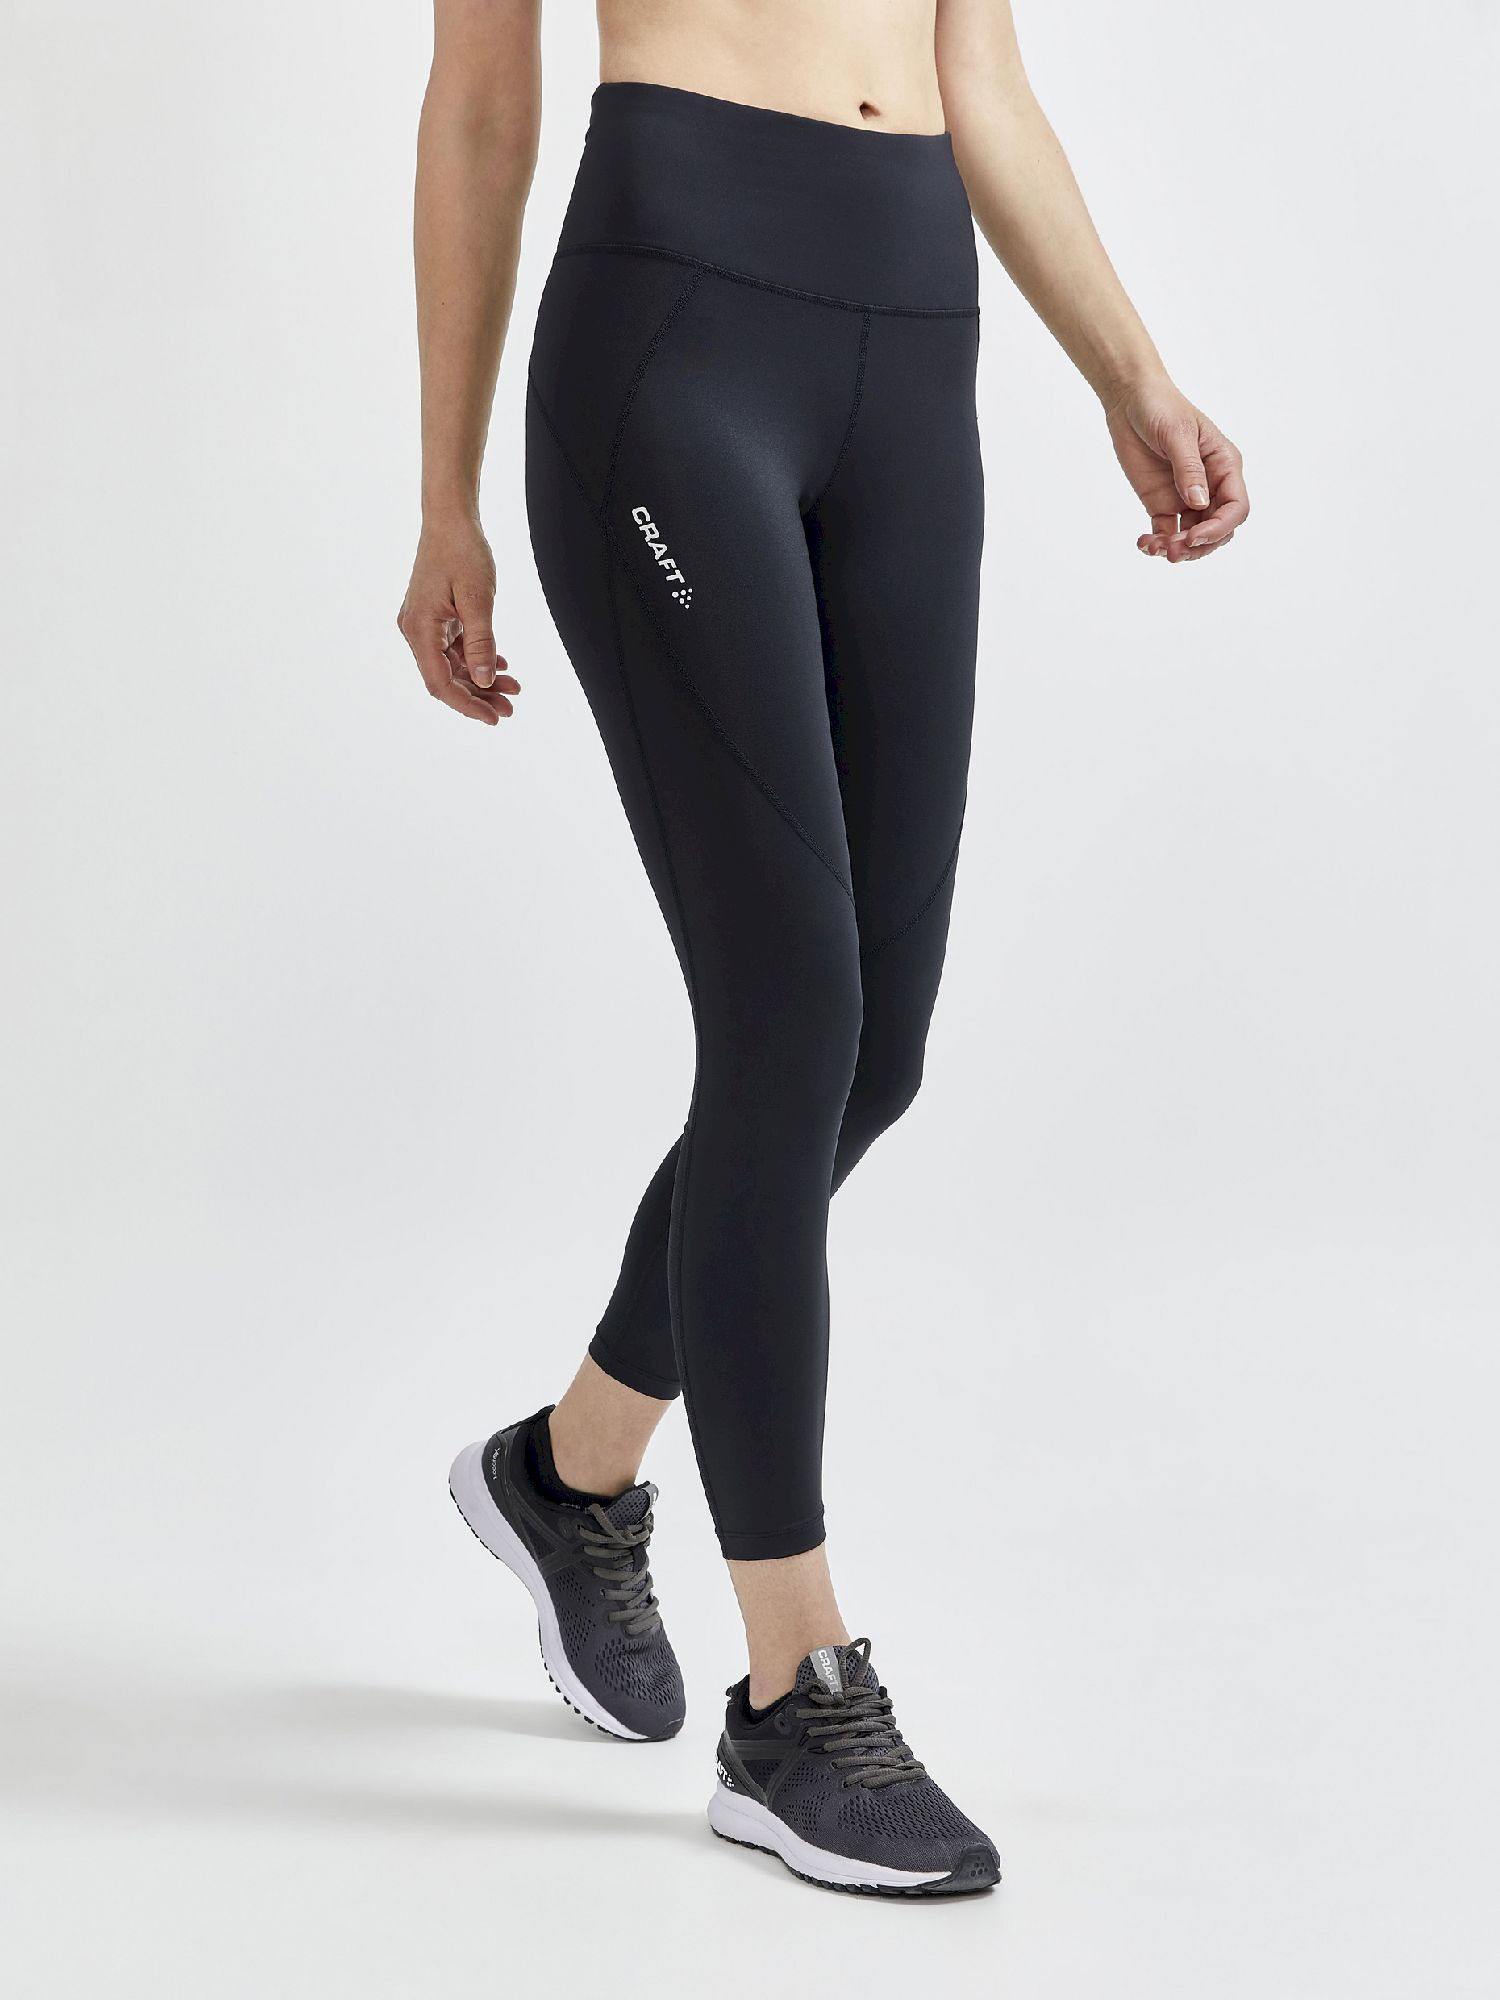 Craft ADV Essence High Waist Tights - Running leggings - Women's | Hardloop